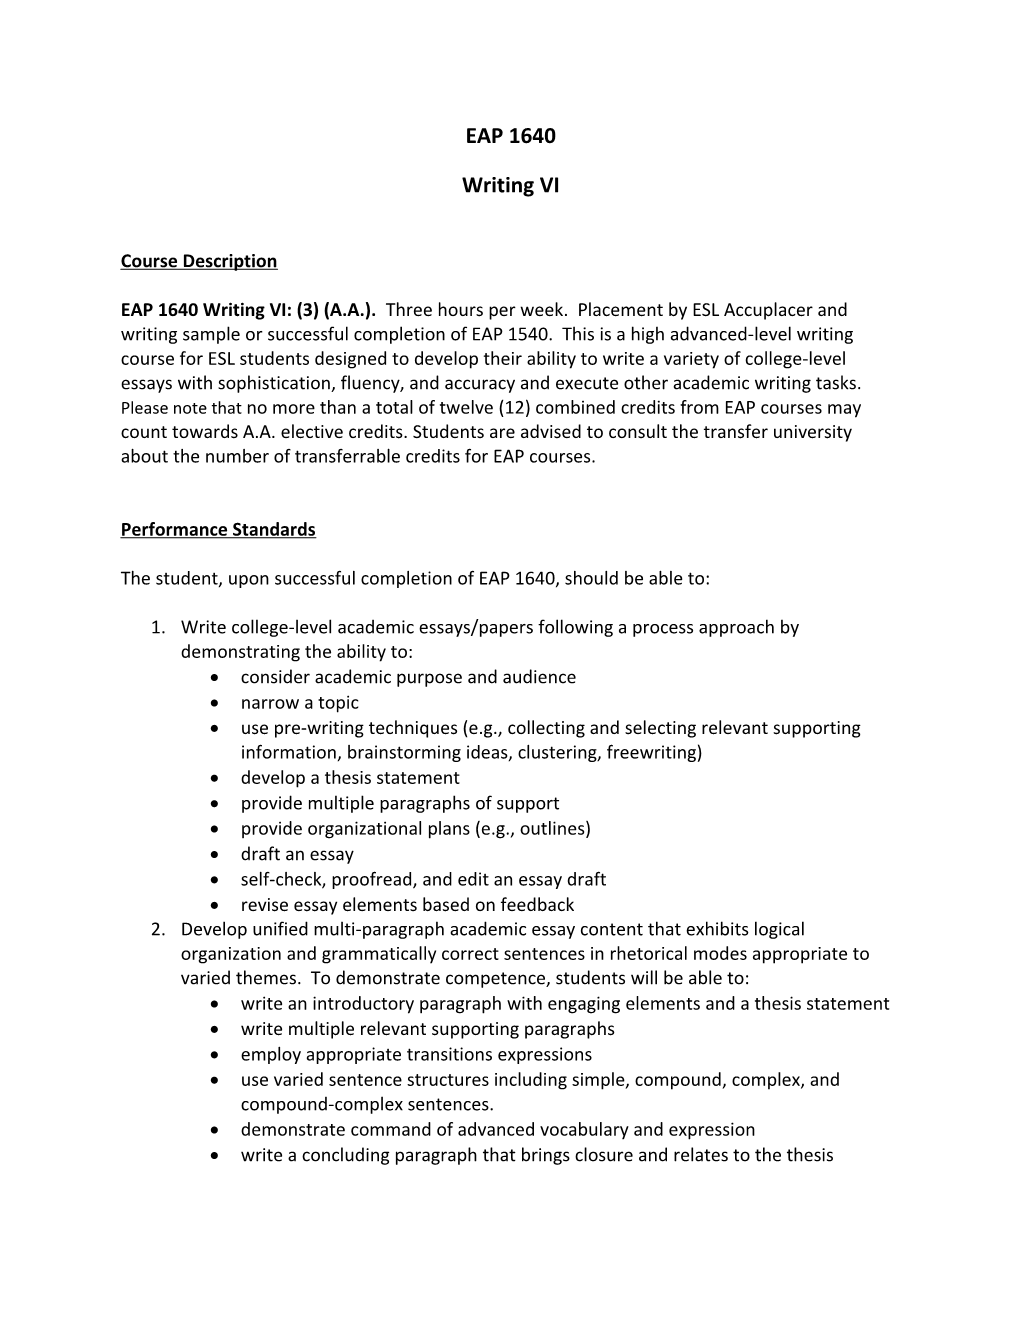 Performance Standards/EAP 1640/Writing VI